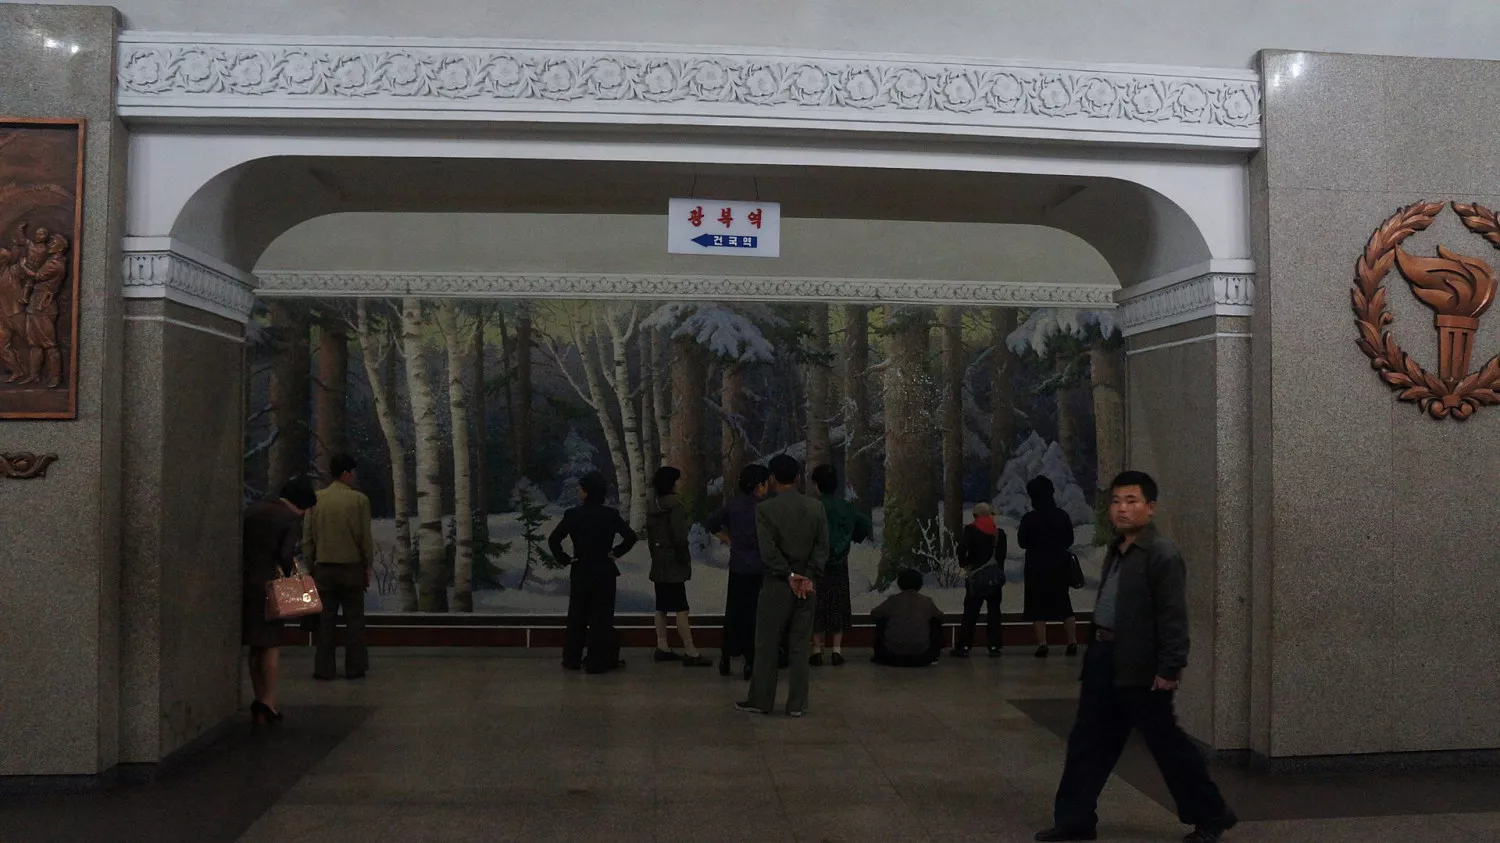 Kwangbok Metro Station - 광복역 - Pyongyang - North Korea